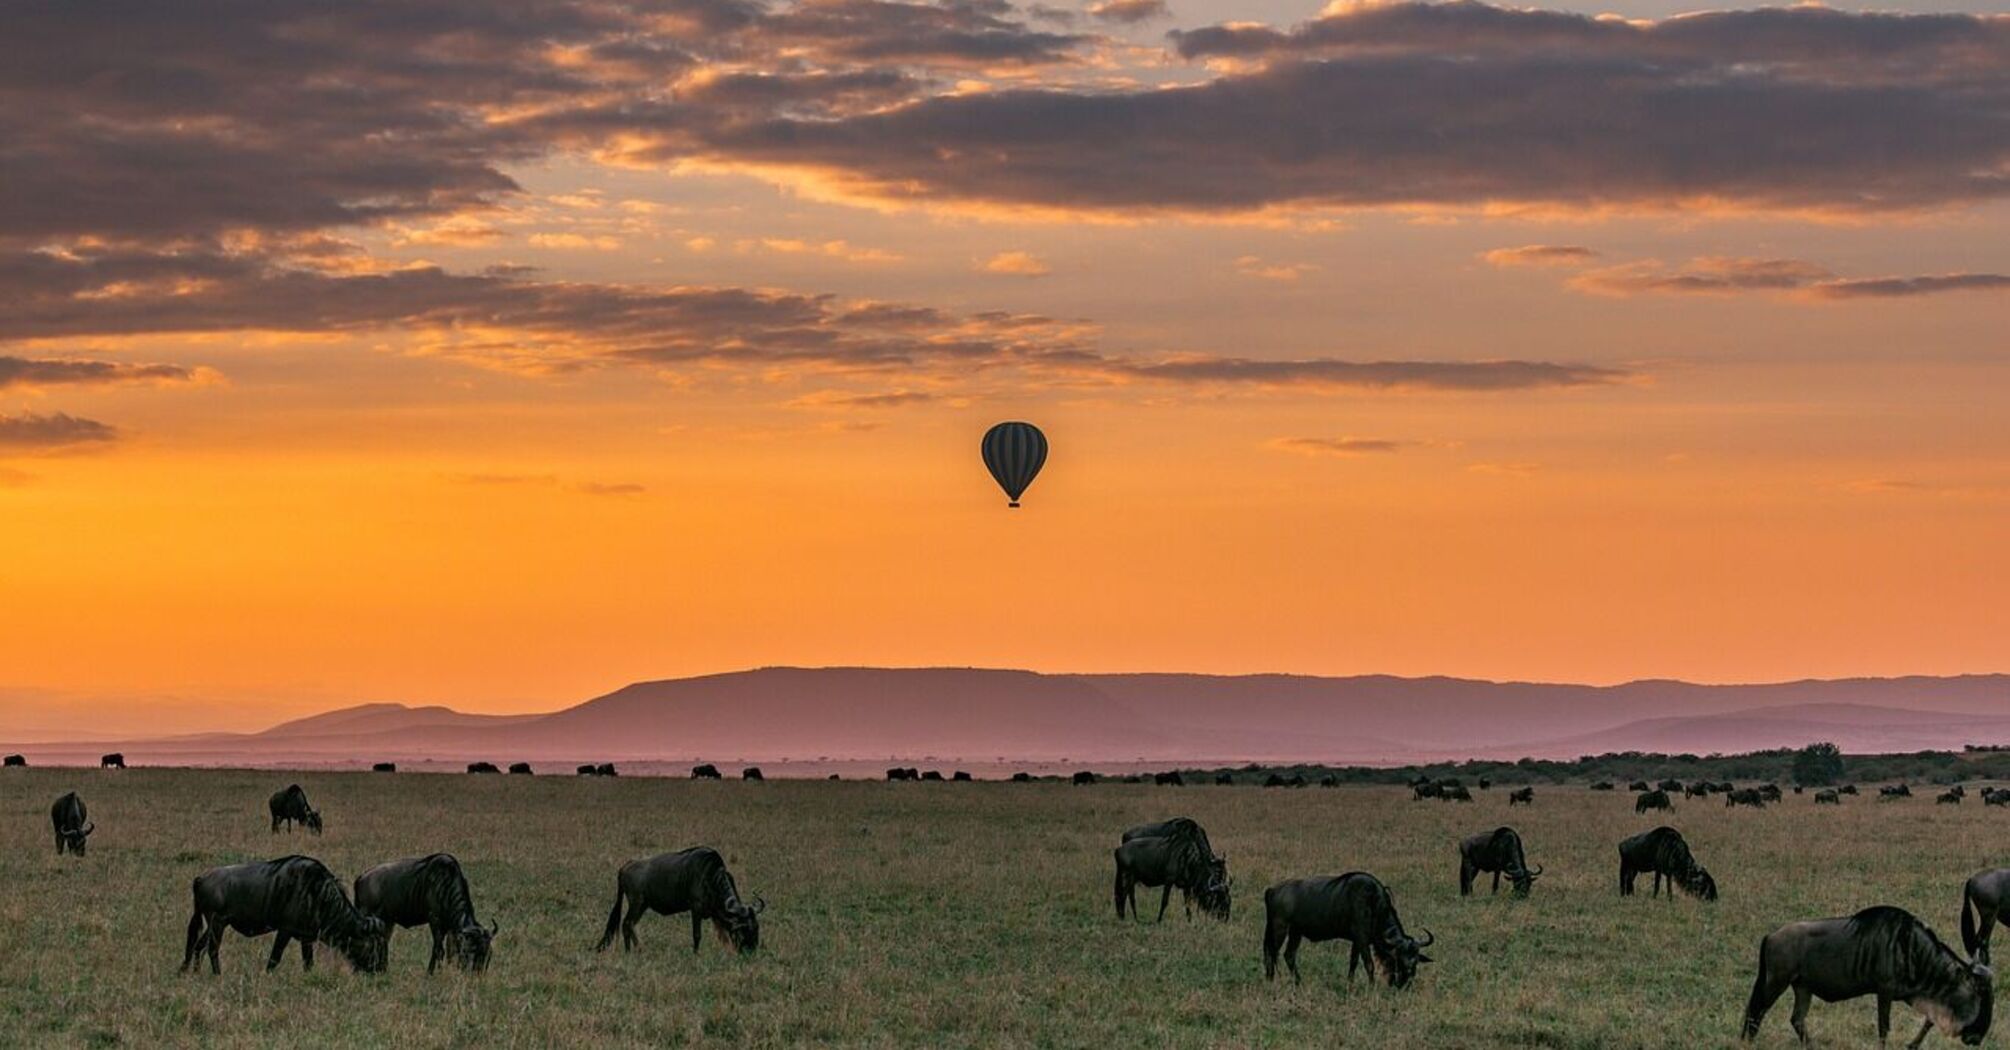 African safari on a budget: from Kenya to Botswana at a reasonable cost